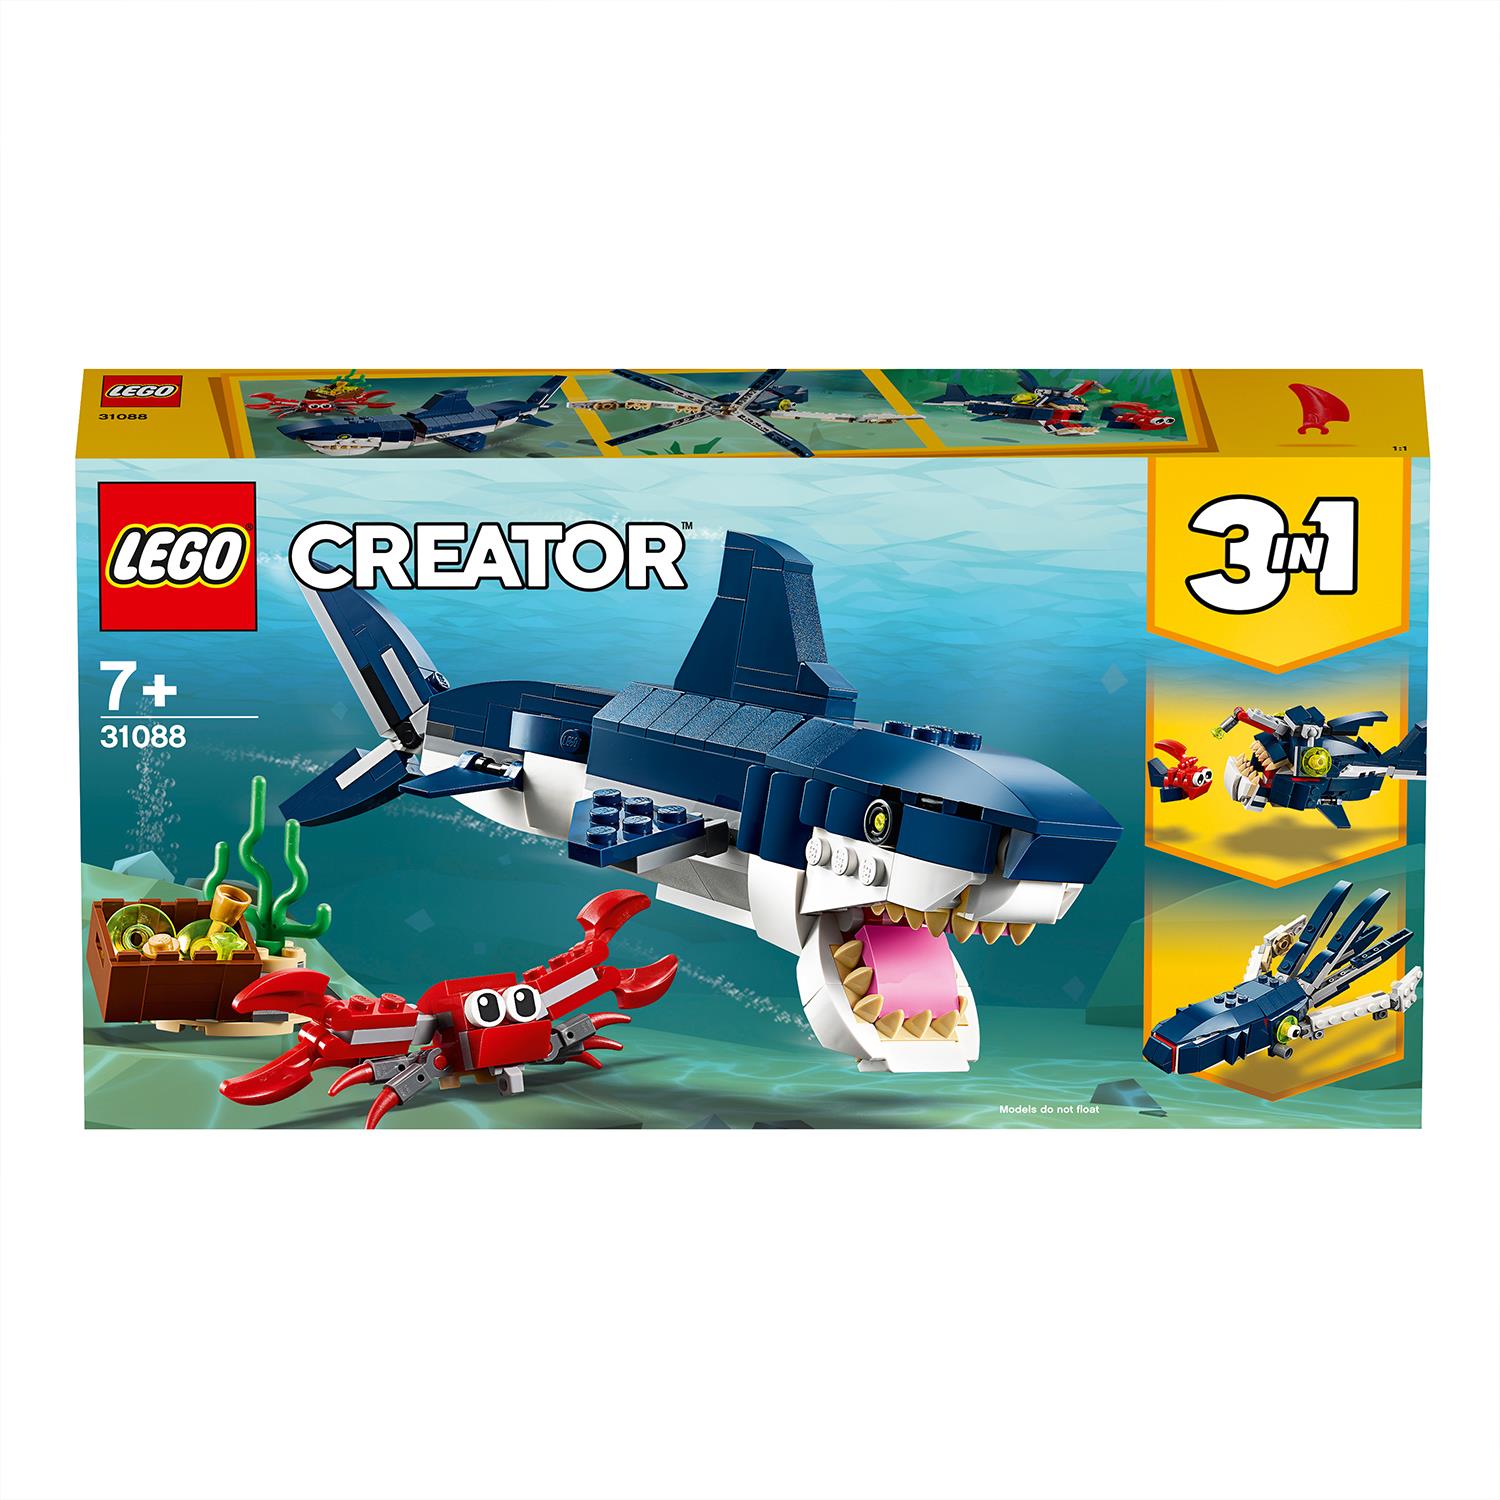 LEGO Creator 31088 Creature